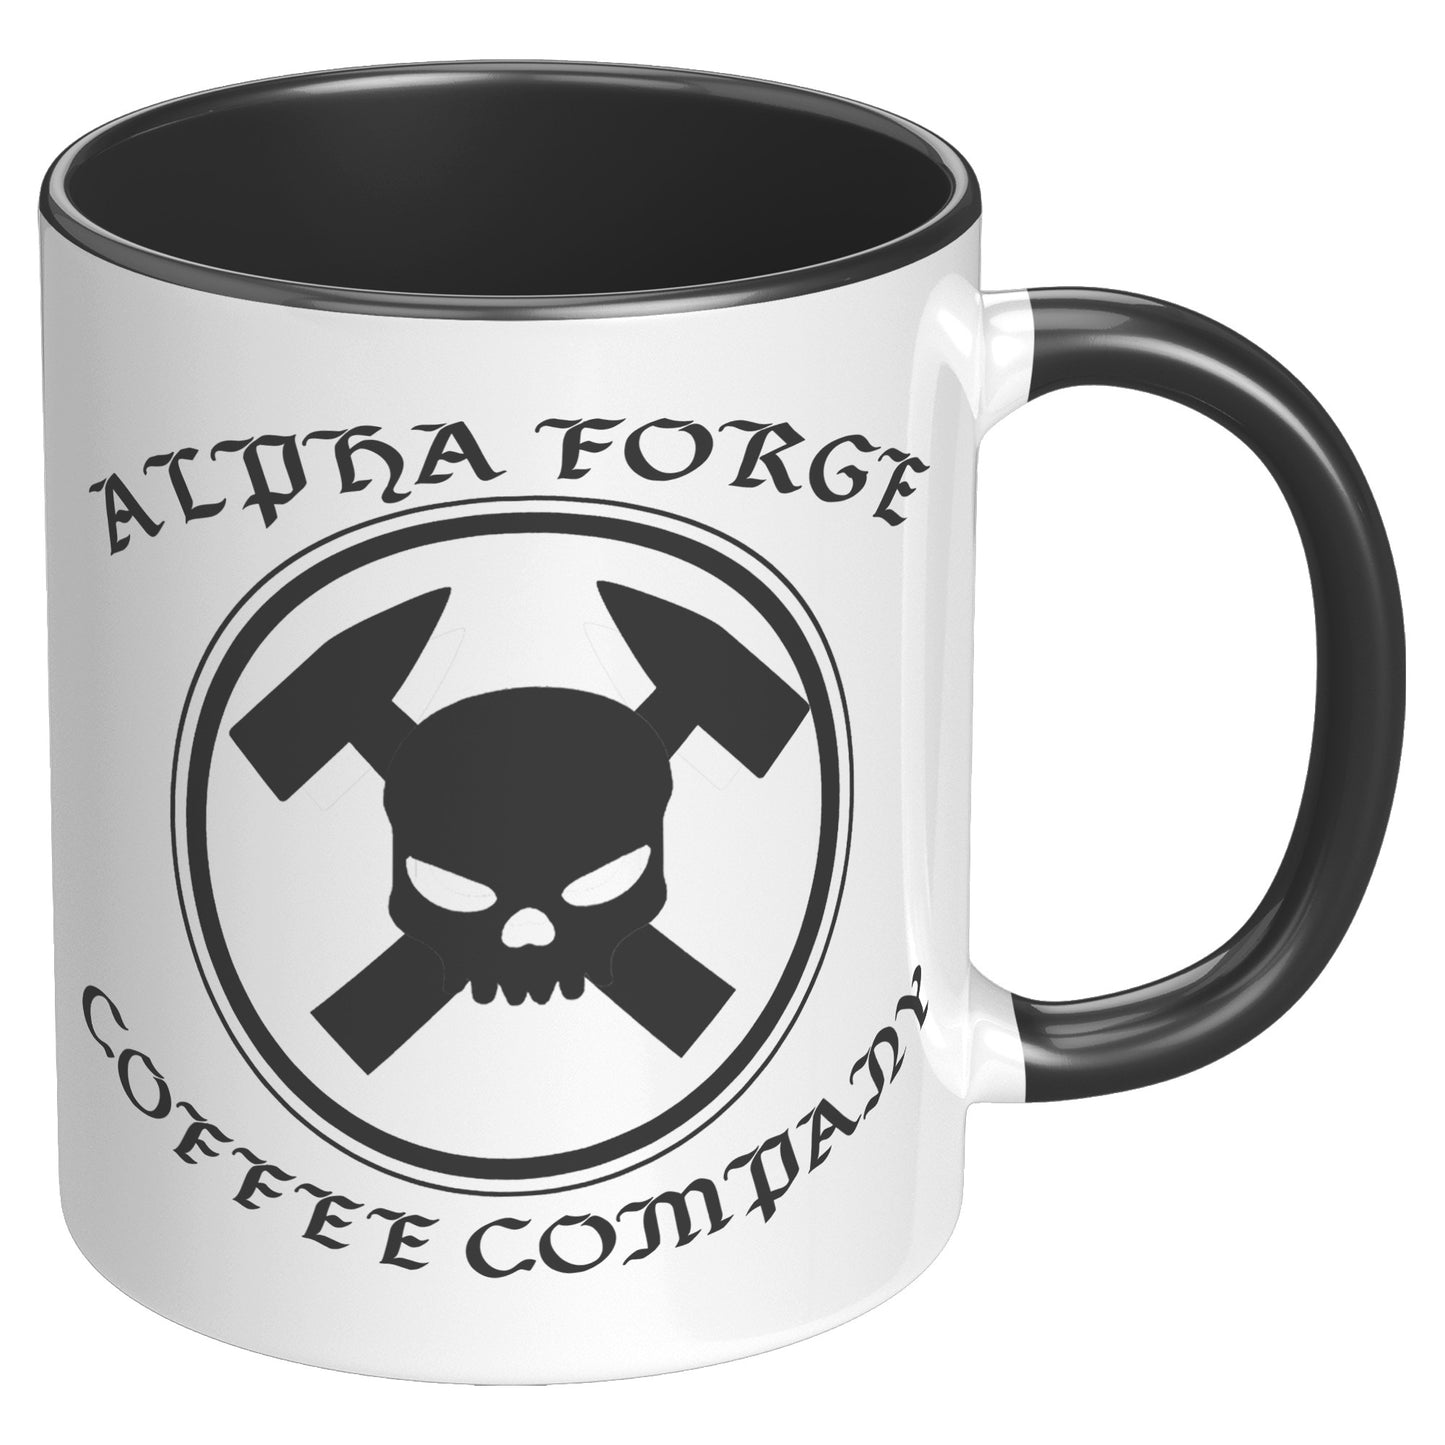 Alpha Forge Coffee Co. 11oz Accent Mug